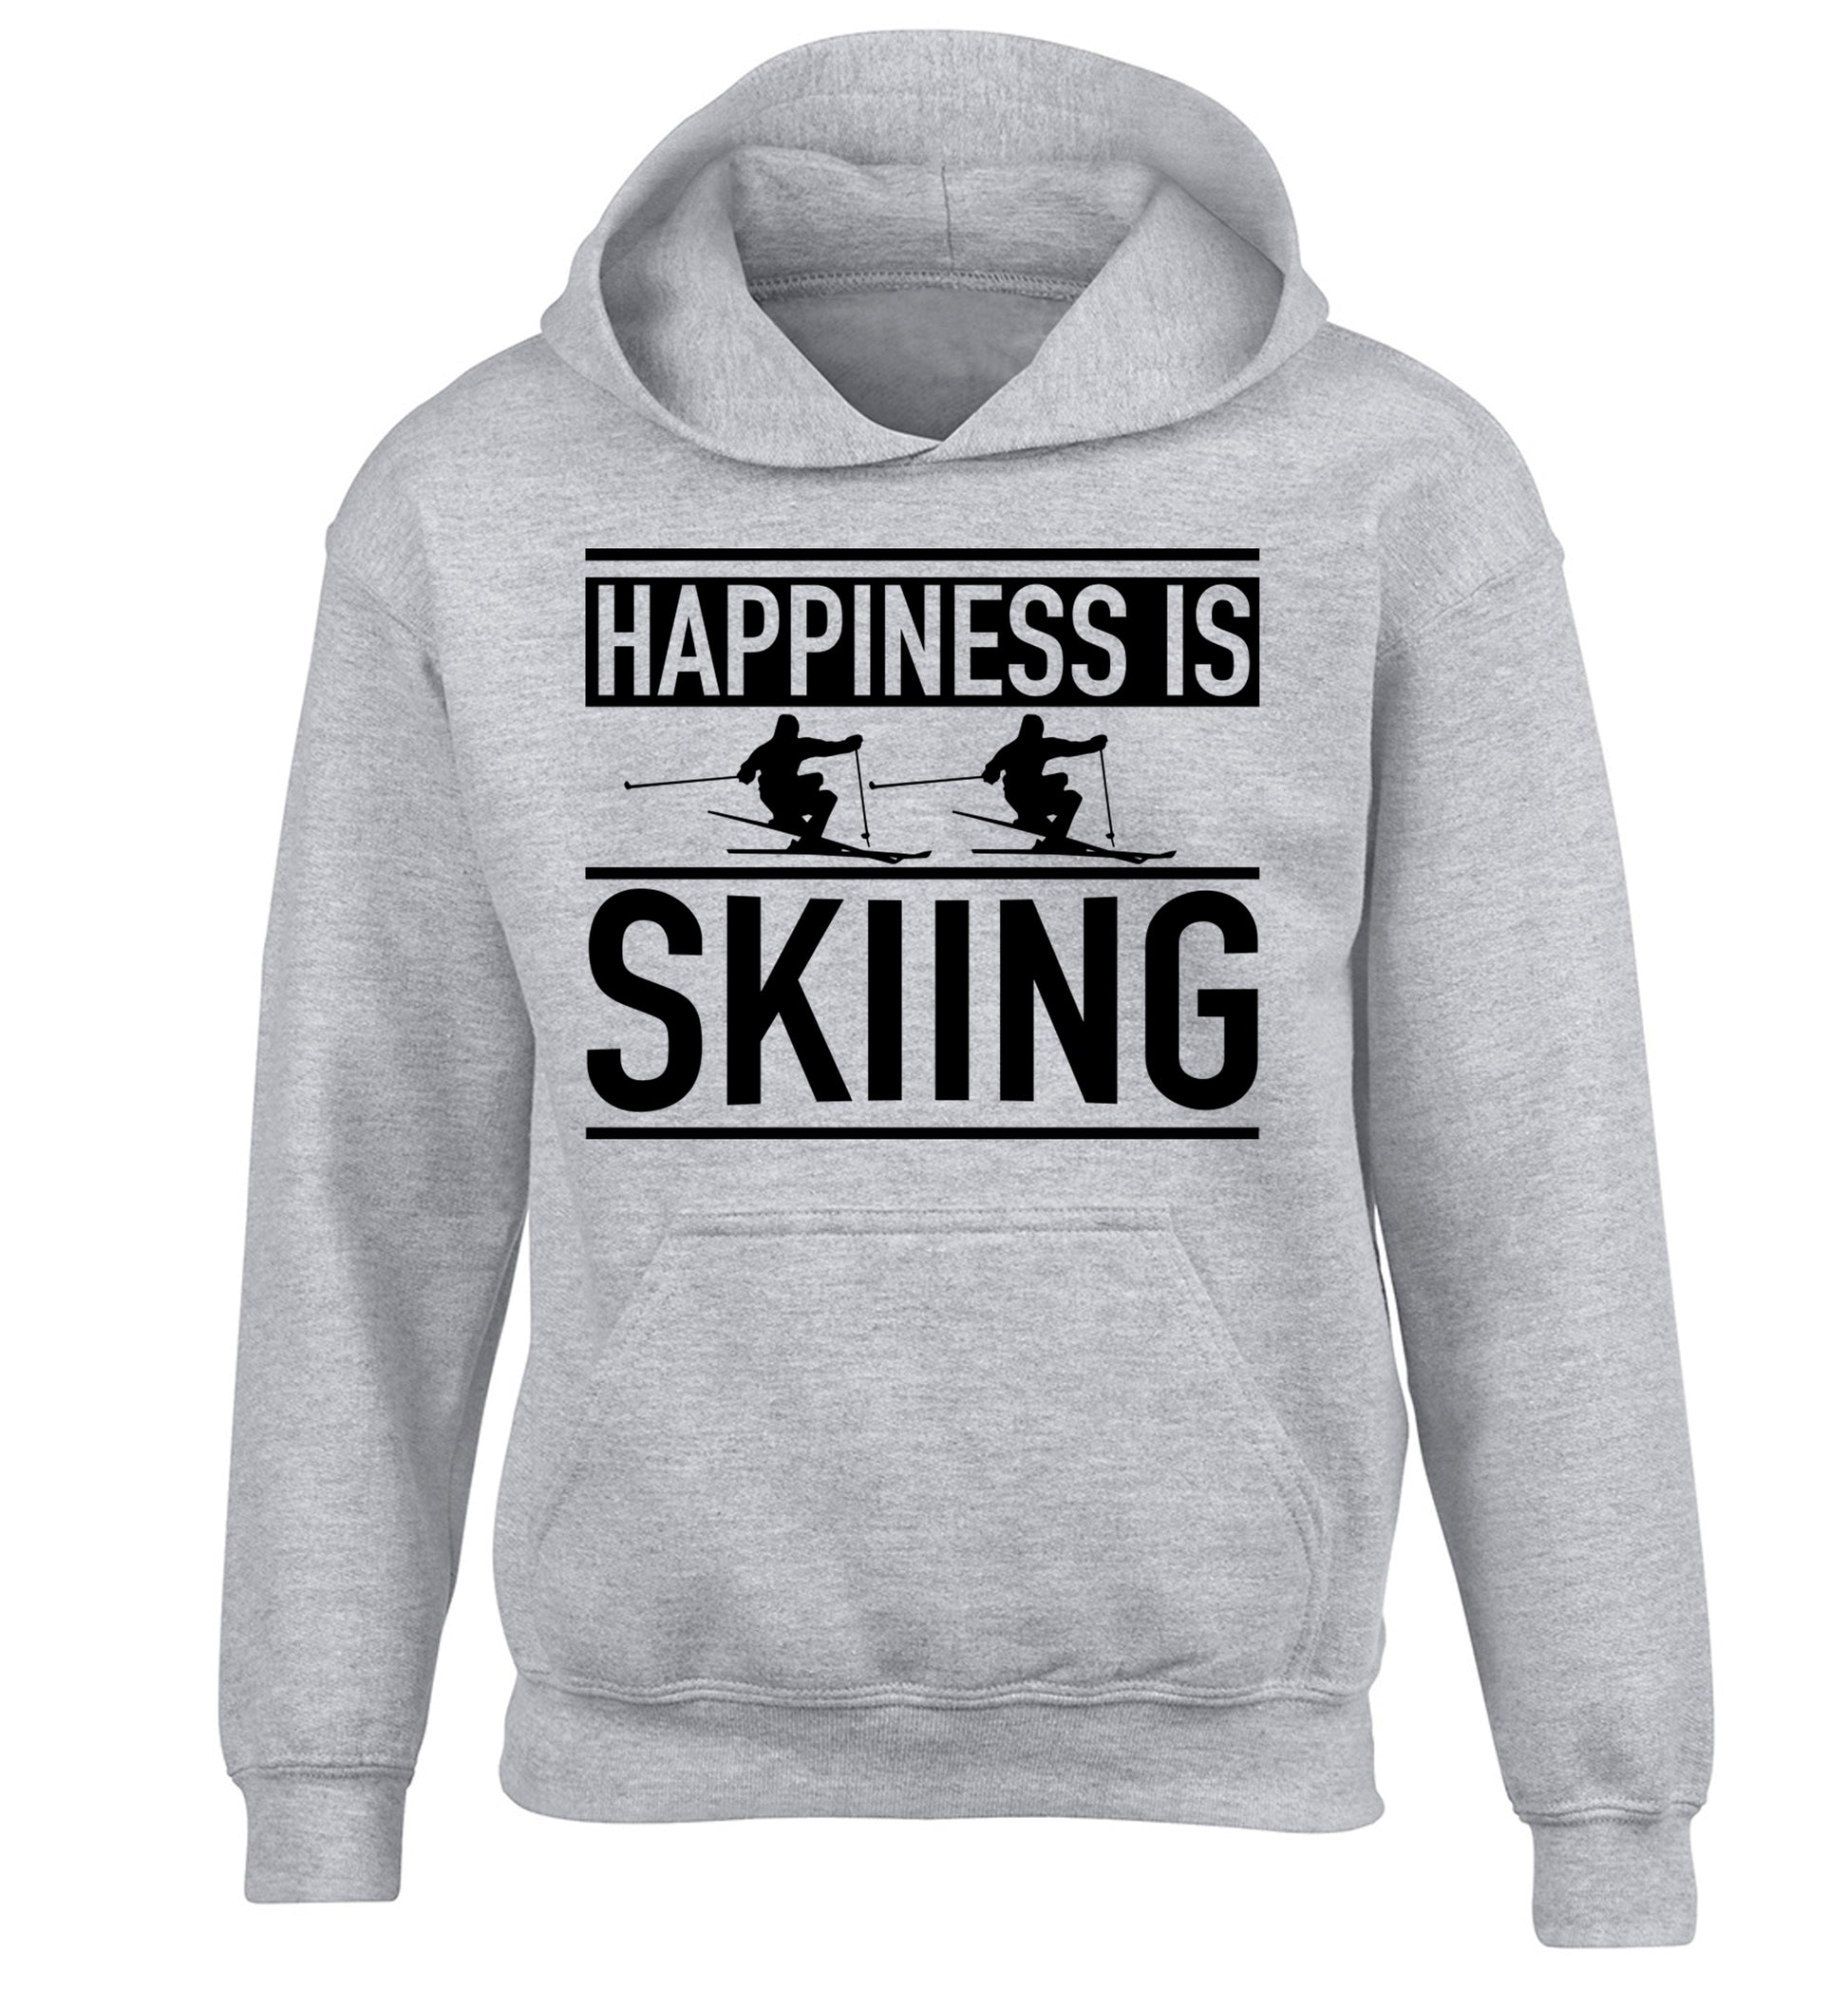 Happiness is skiing children's grey hoodie 12-14 Years